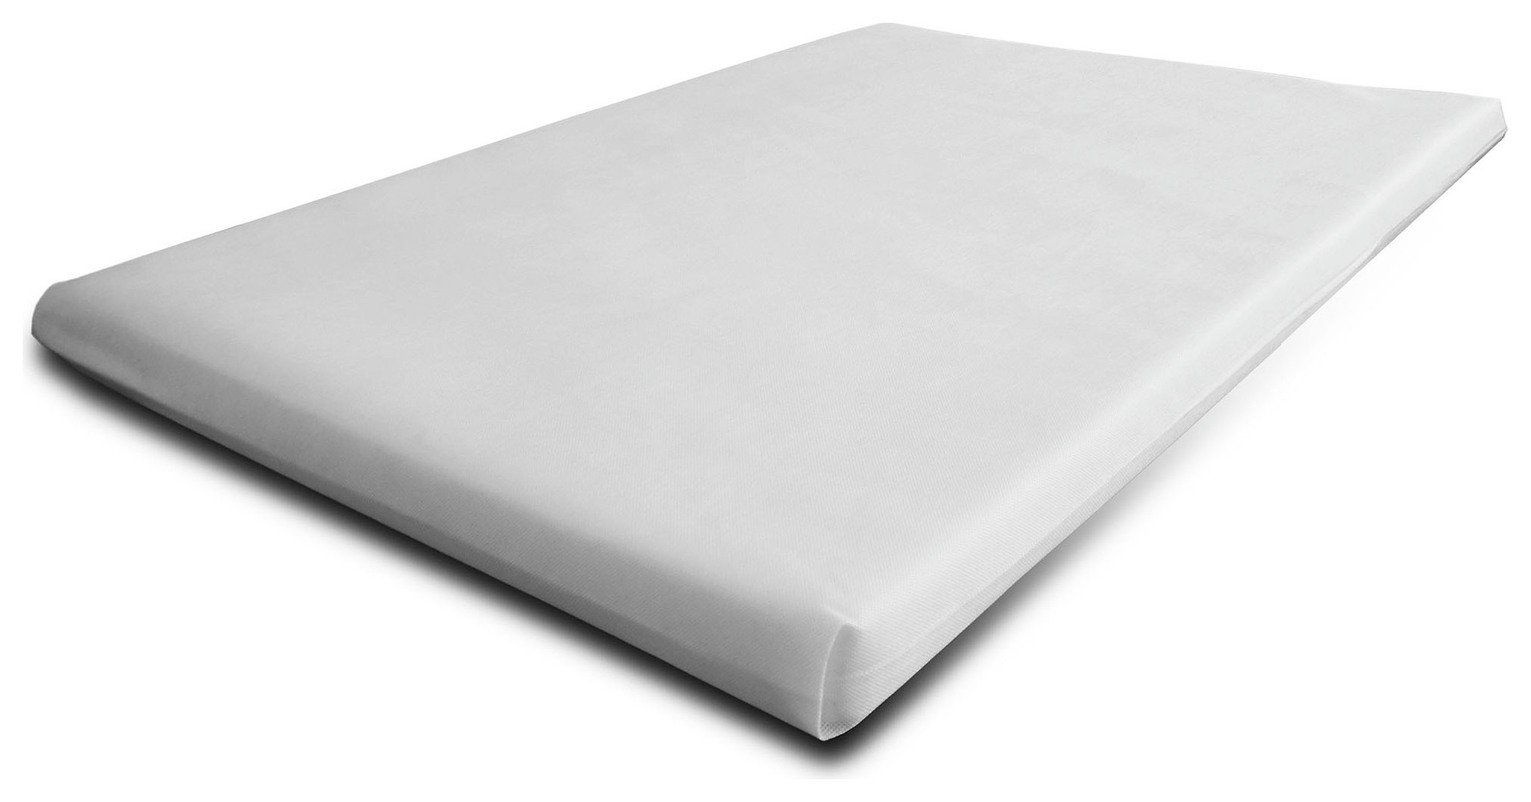 hauck travel cot mattress argos